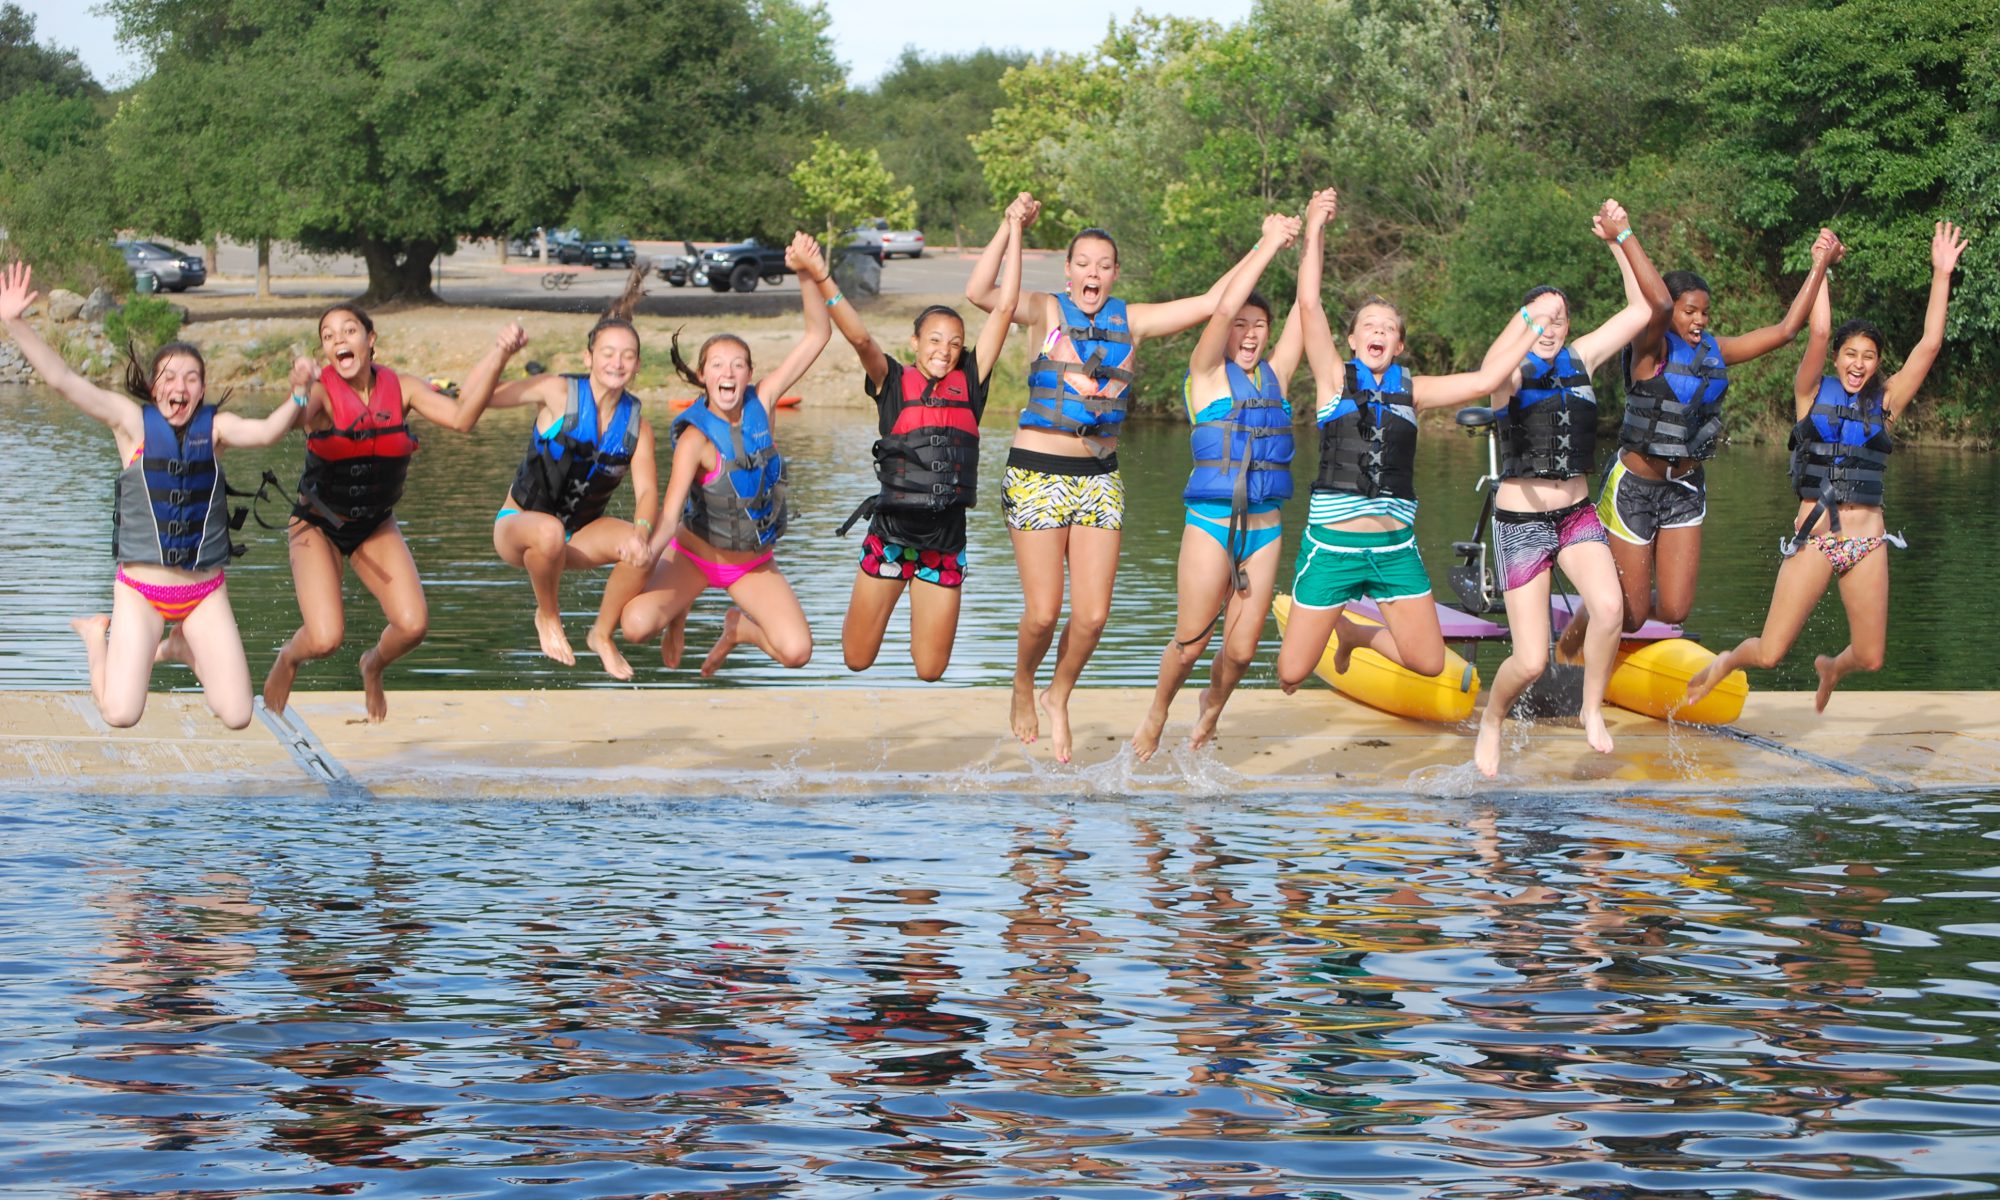 sacramento state aquatic centre kids jumping into the lake